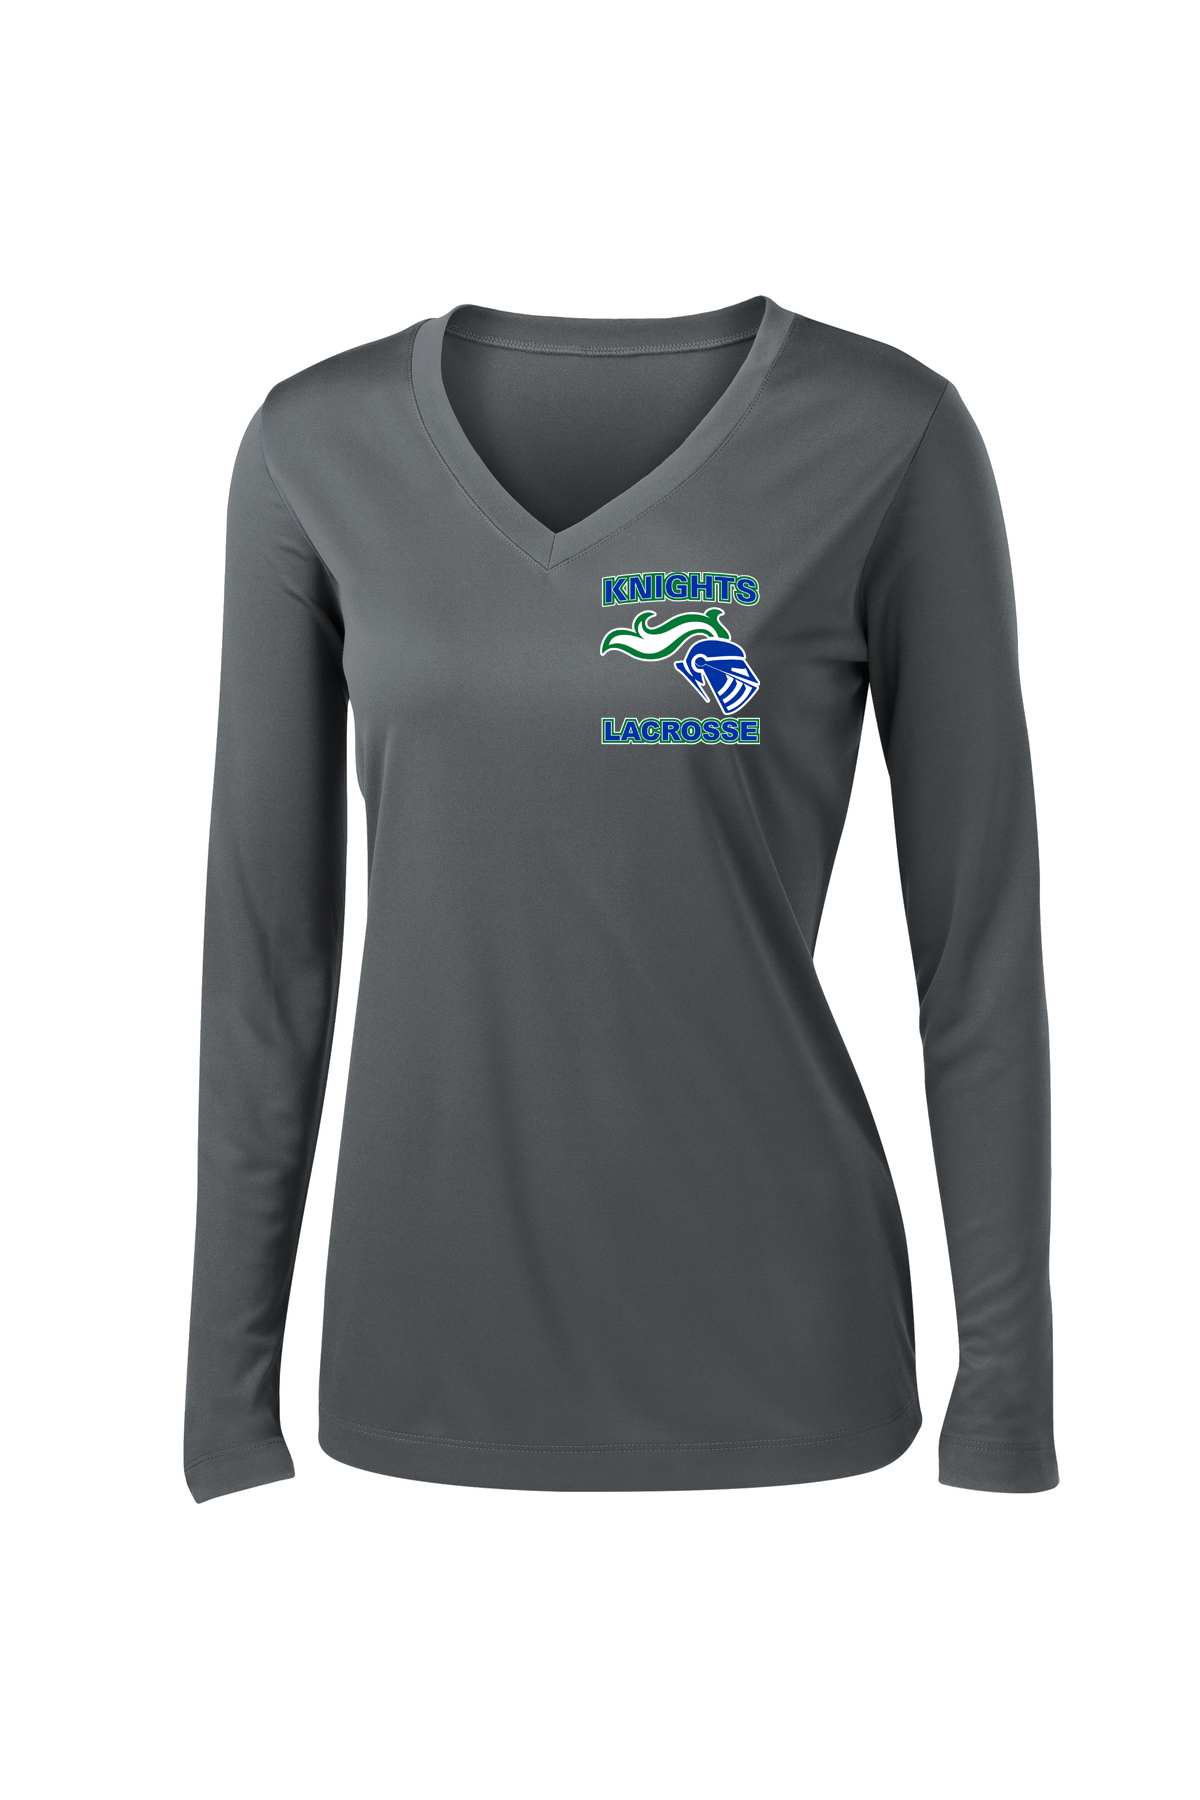 Lake Norman Lacrosse Women's Long Sleeve Performance Shirt